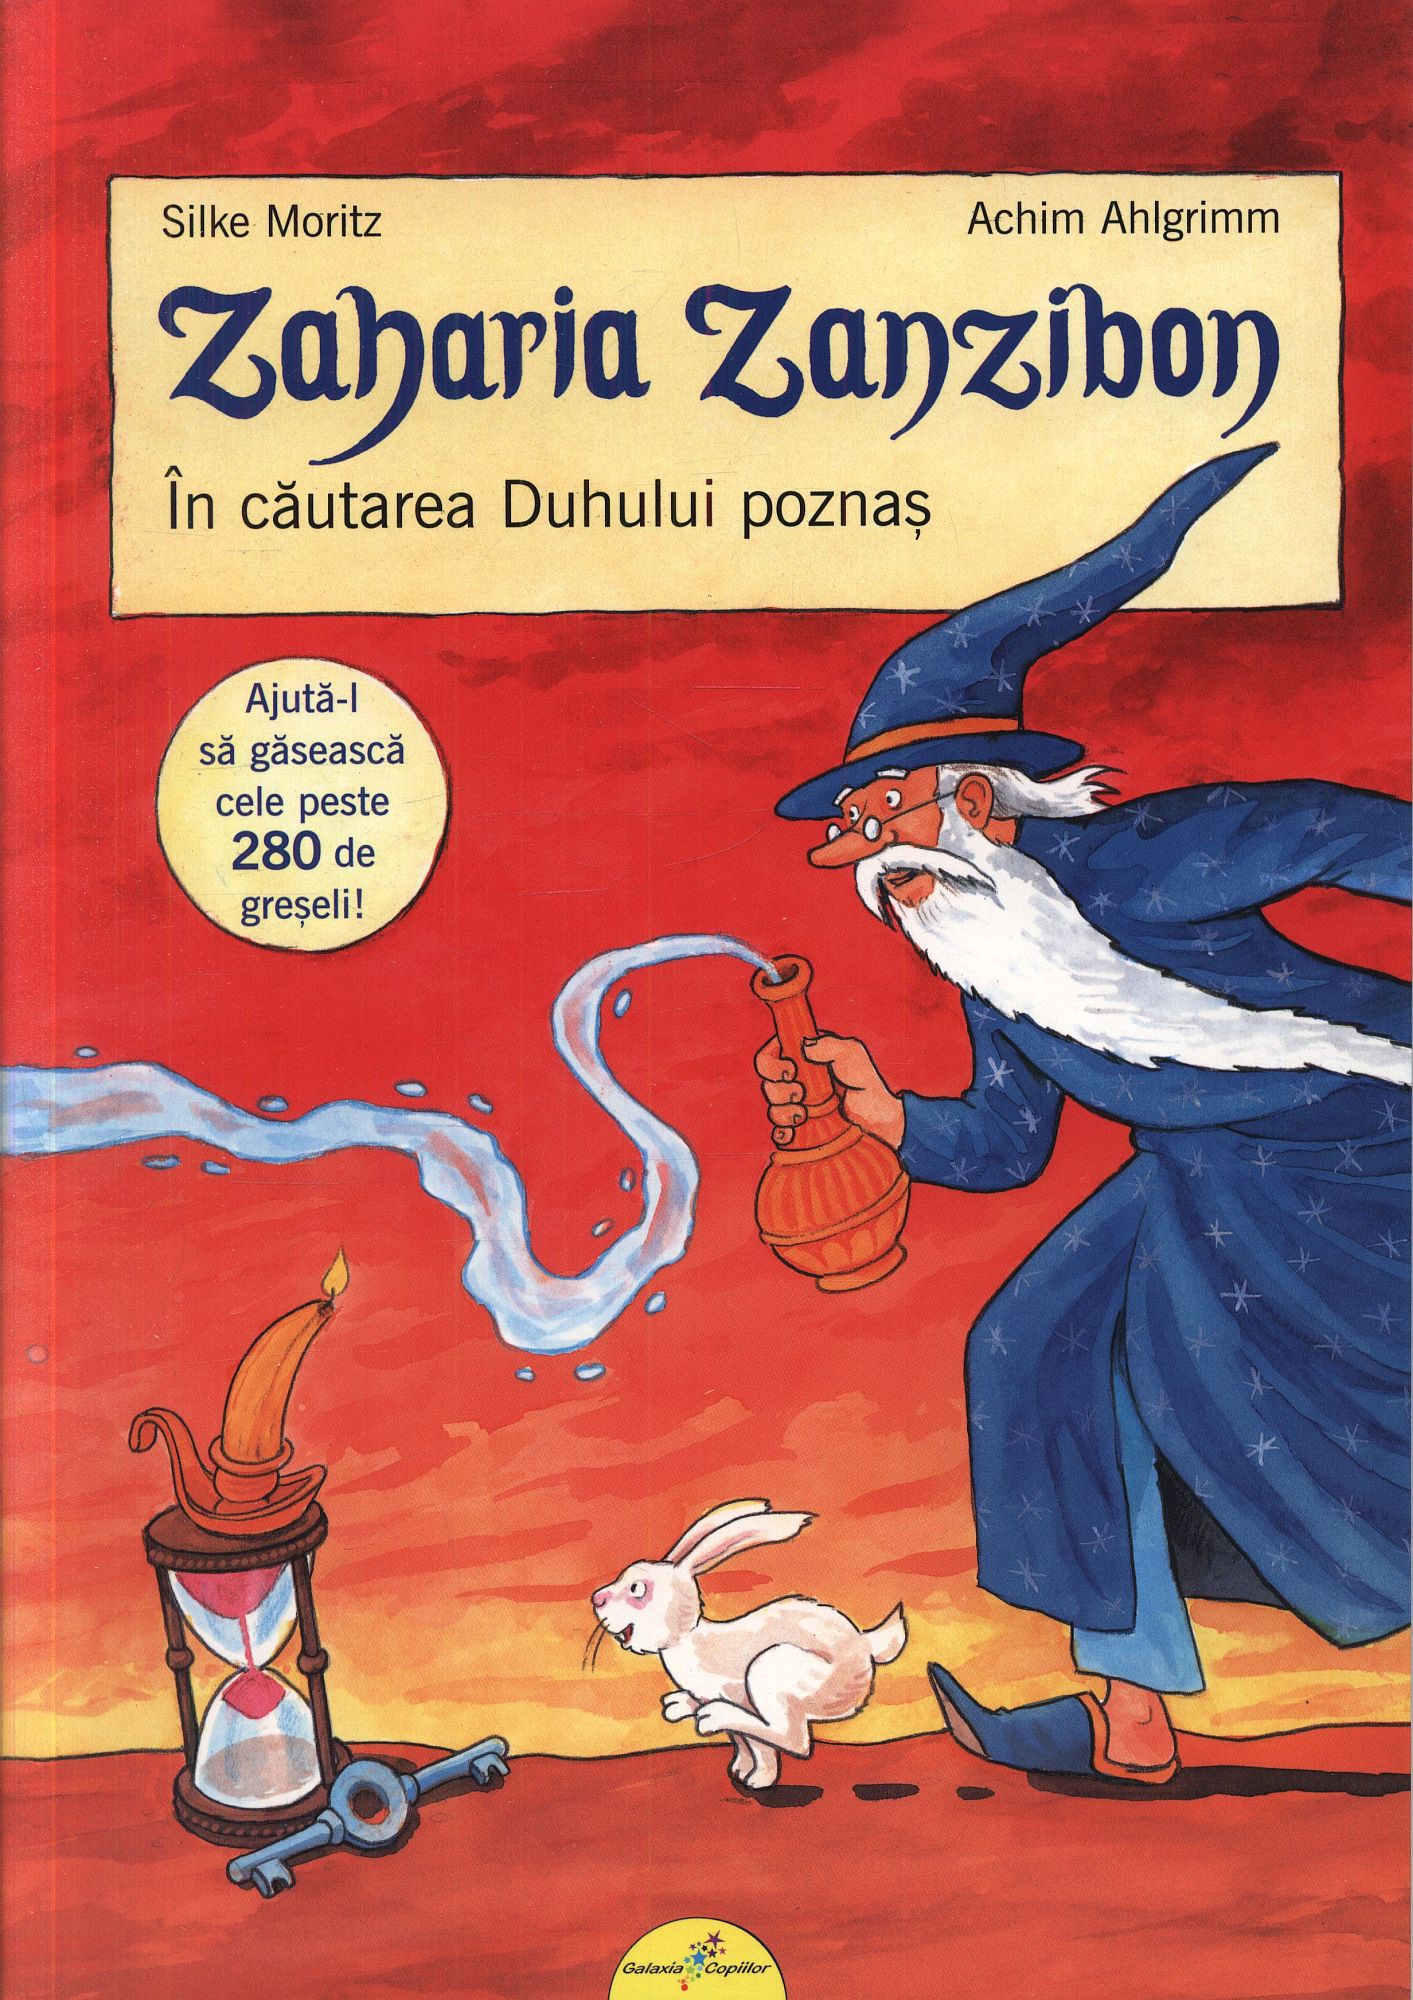 Zaharia Zanzibon vol. 2 - In cautarea duhului poznas | Silke Moritz